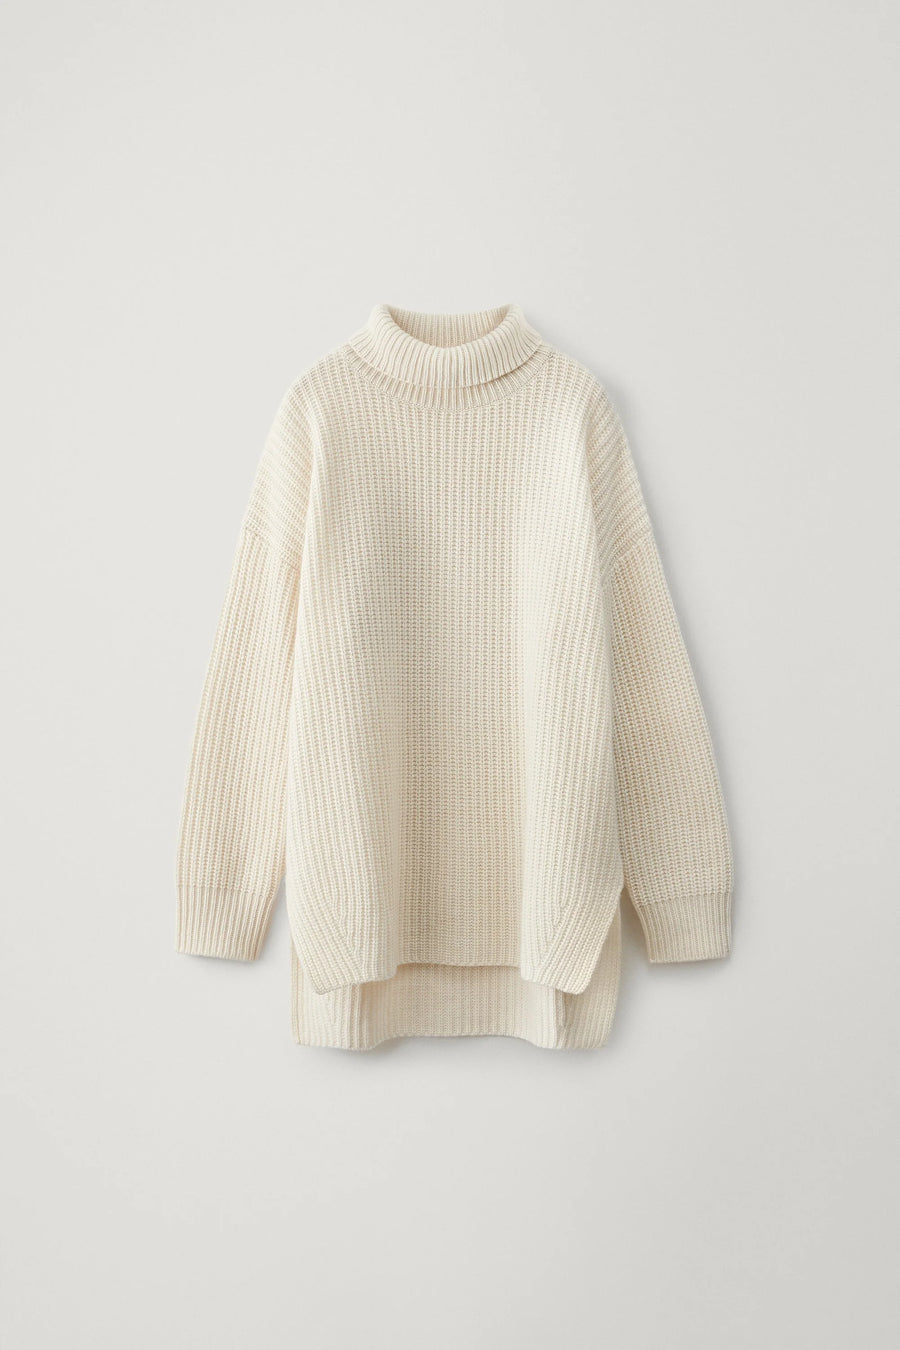 Therese Sweater - Cream